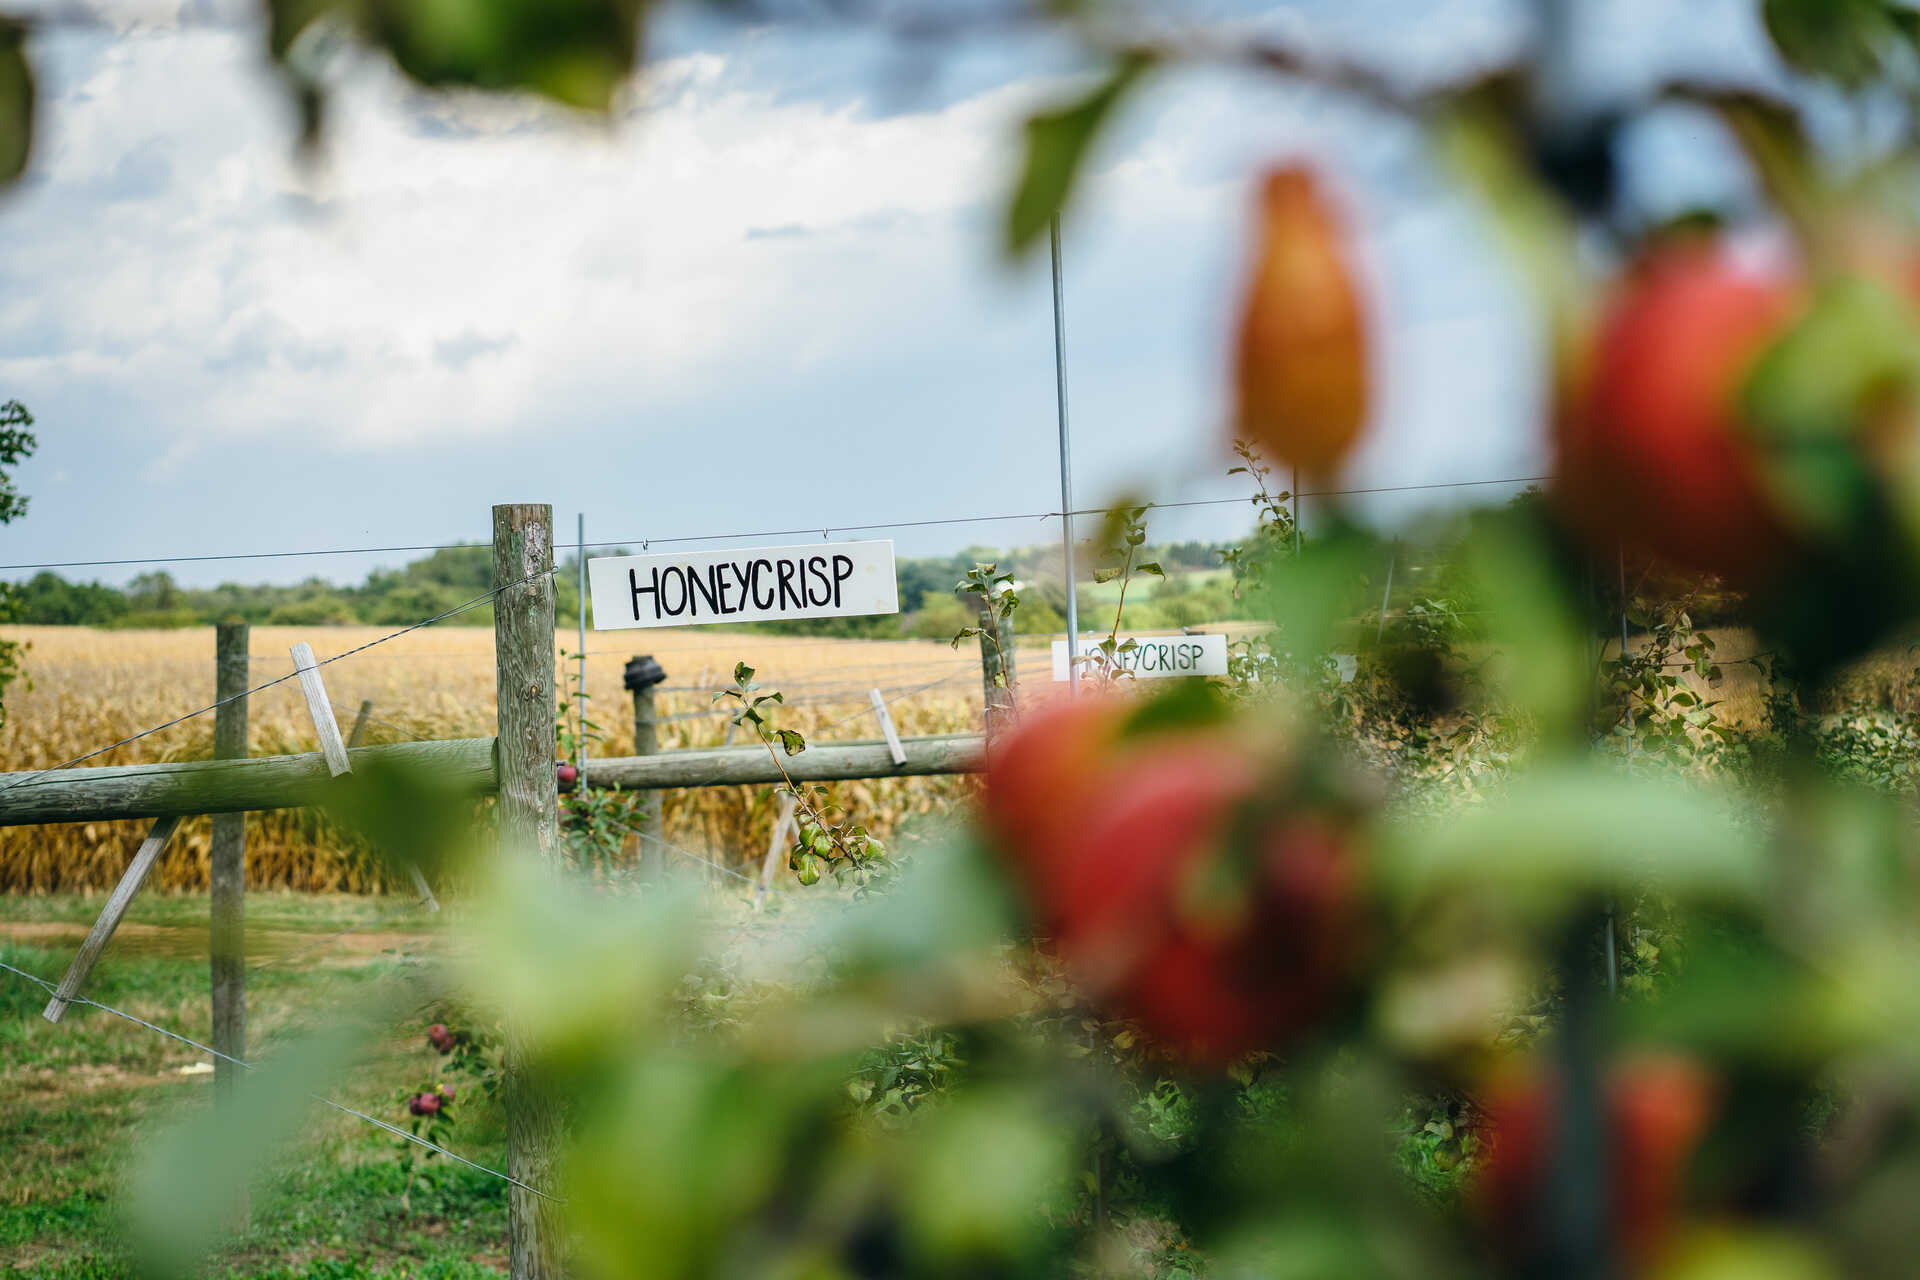 Honeycrisp apples at Cody's Farm & Orchard near Marengo, Illinois